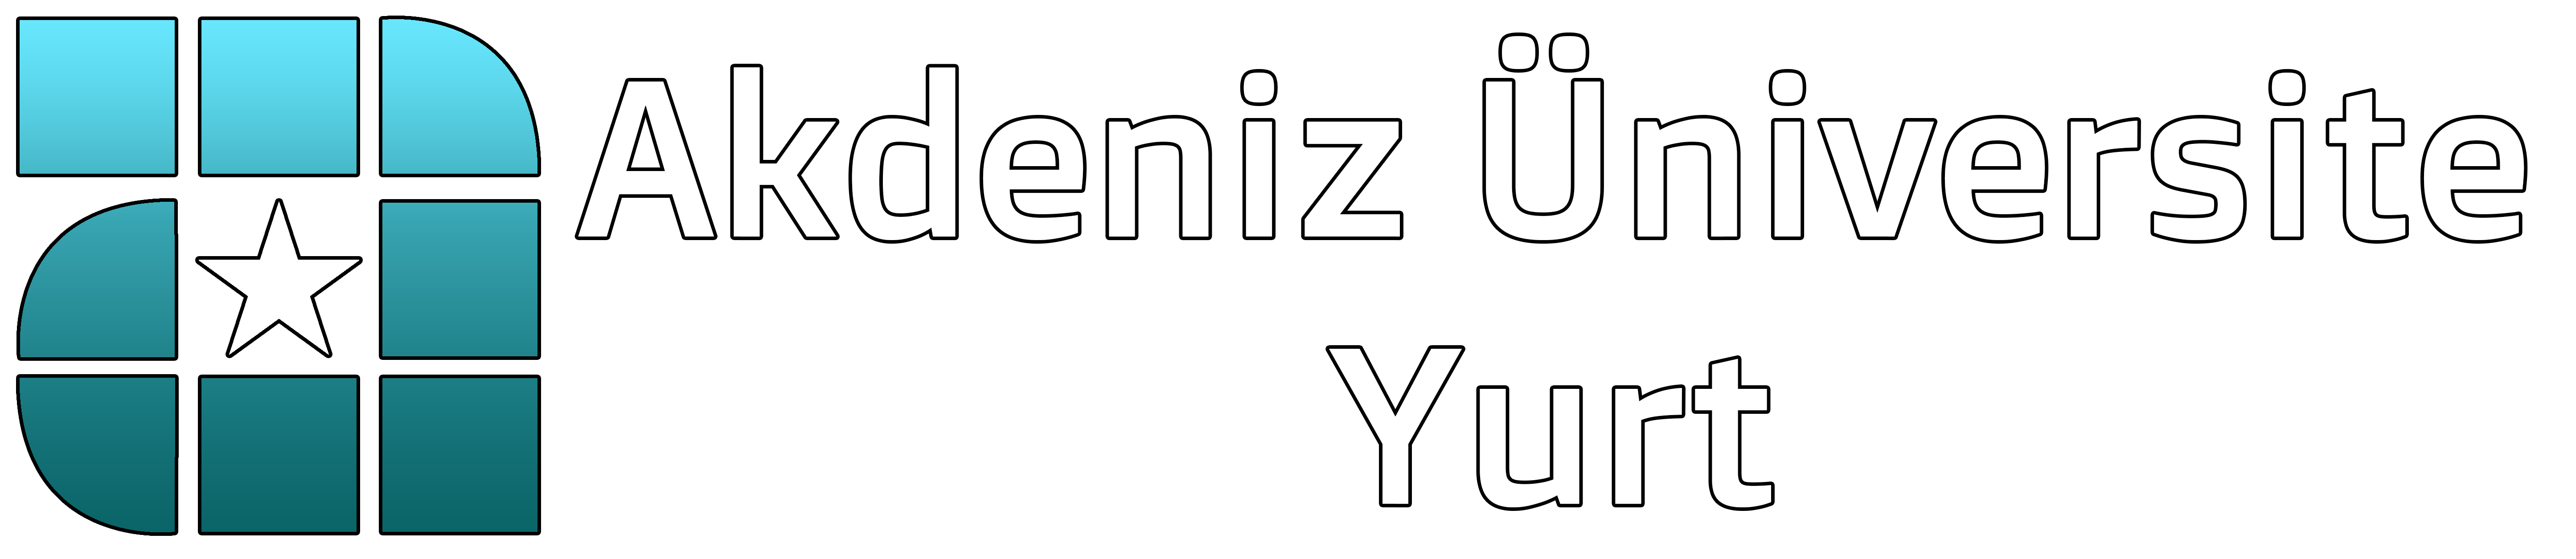 Akdeniz Üniversite Yurt Logo